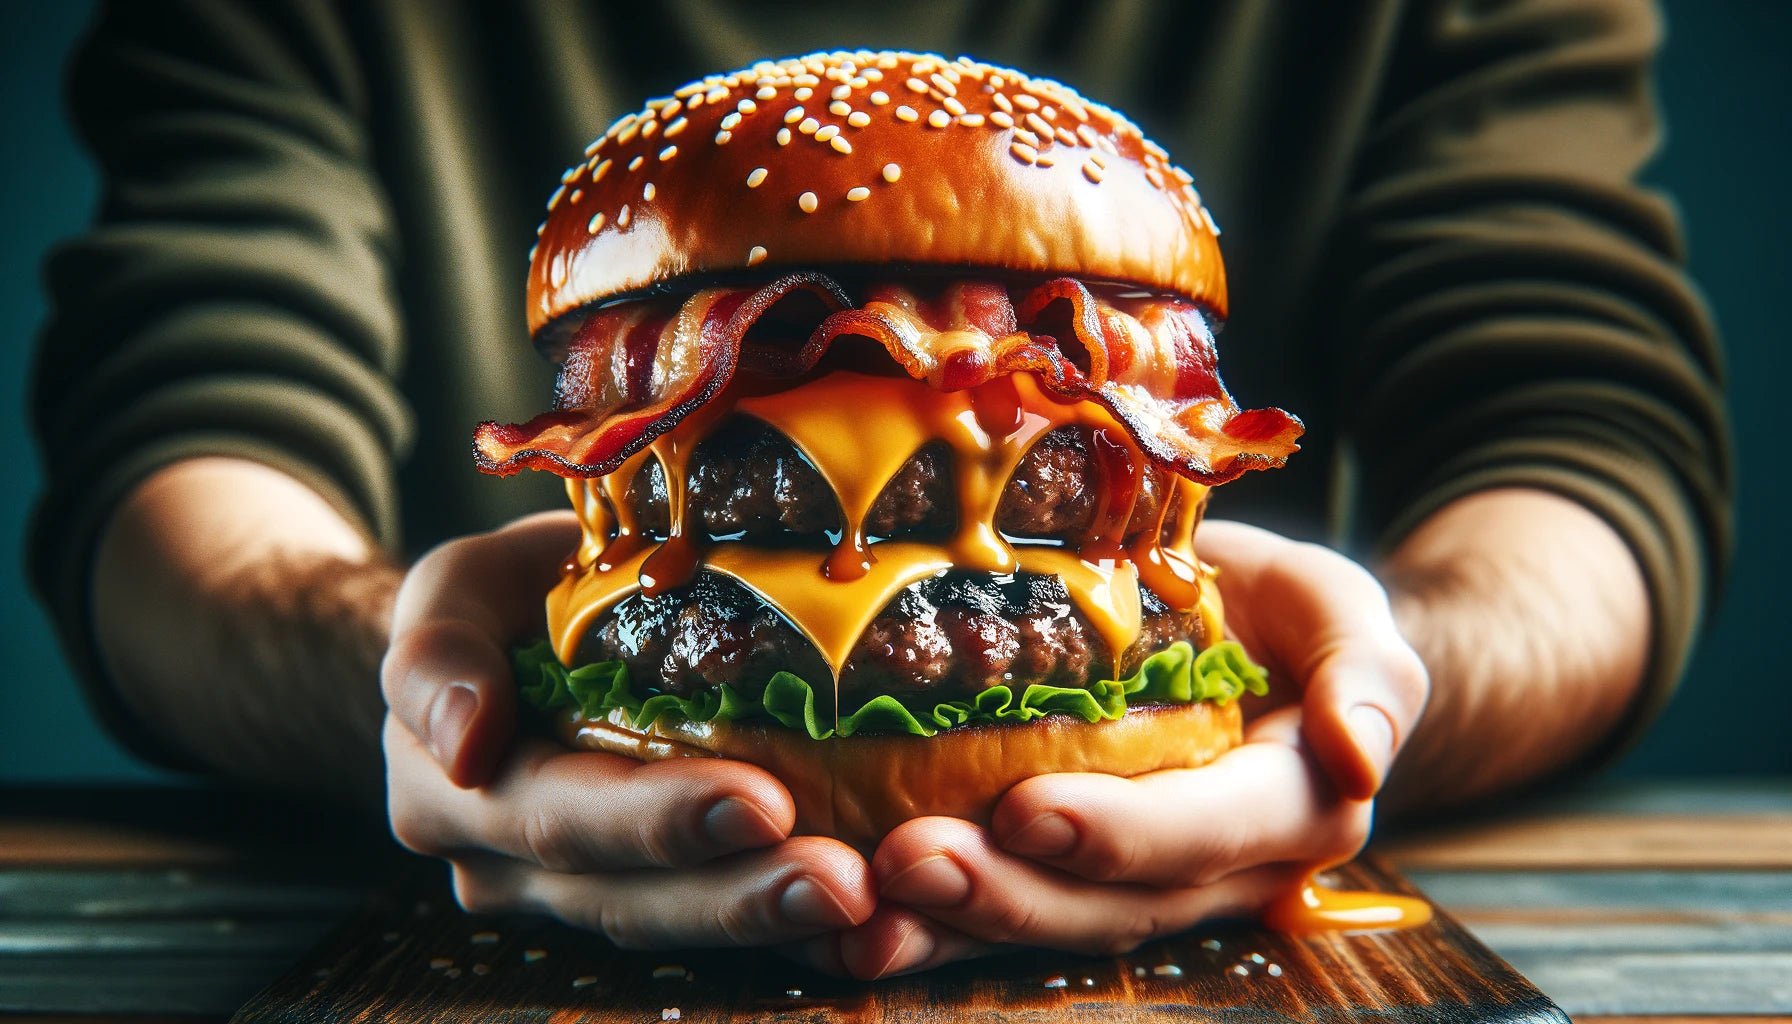 big, juicy hamburger held in someone's hands